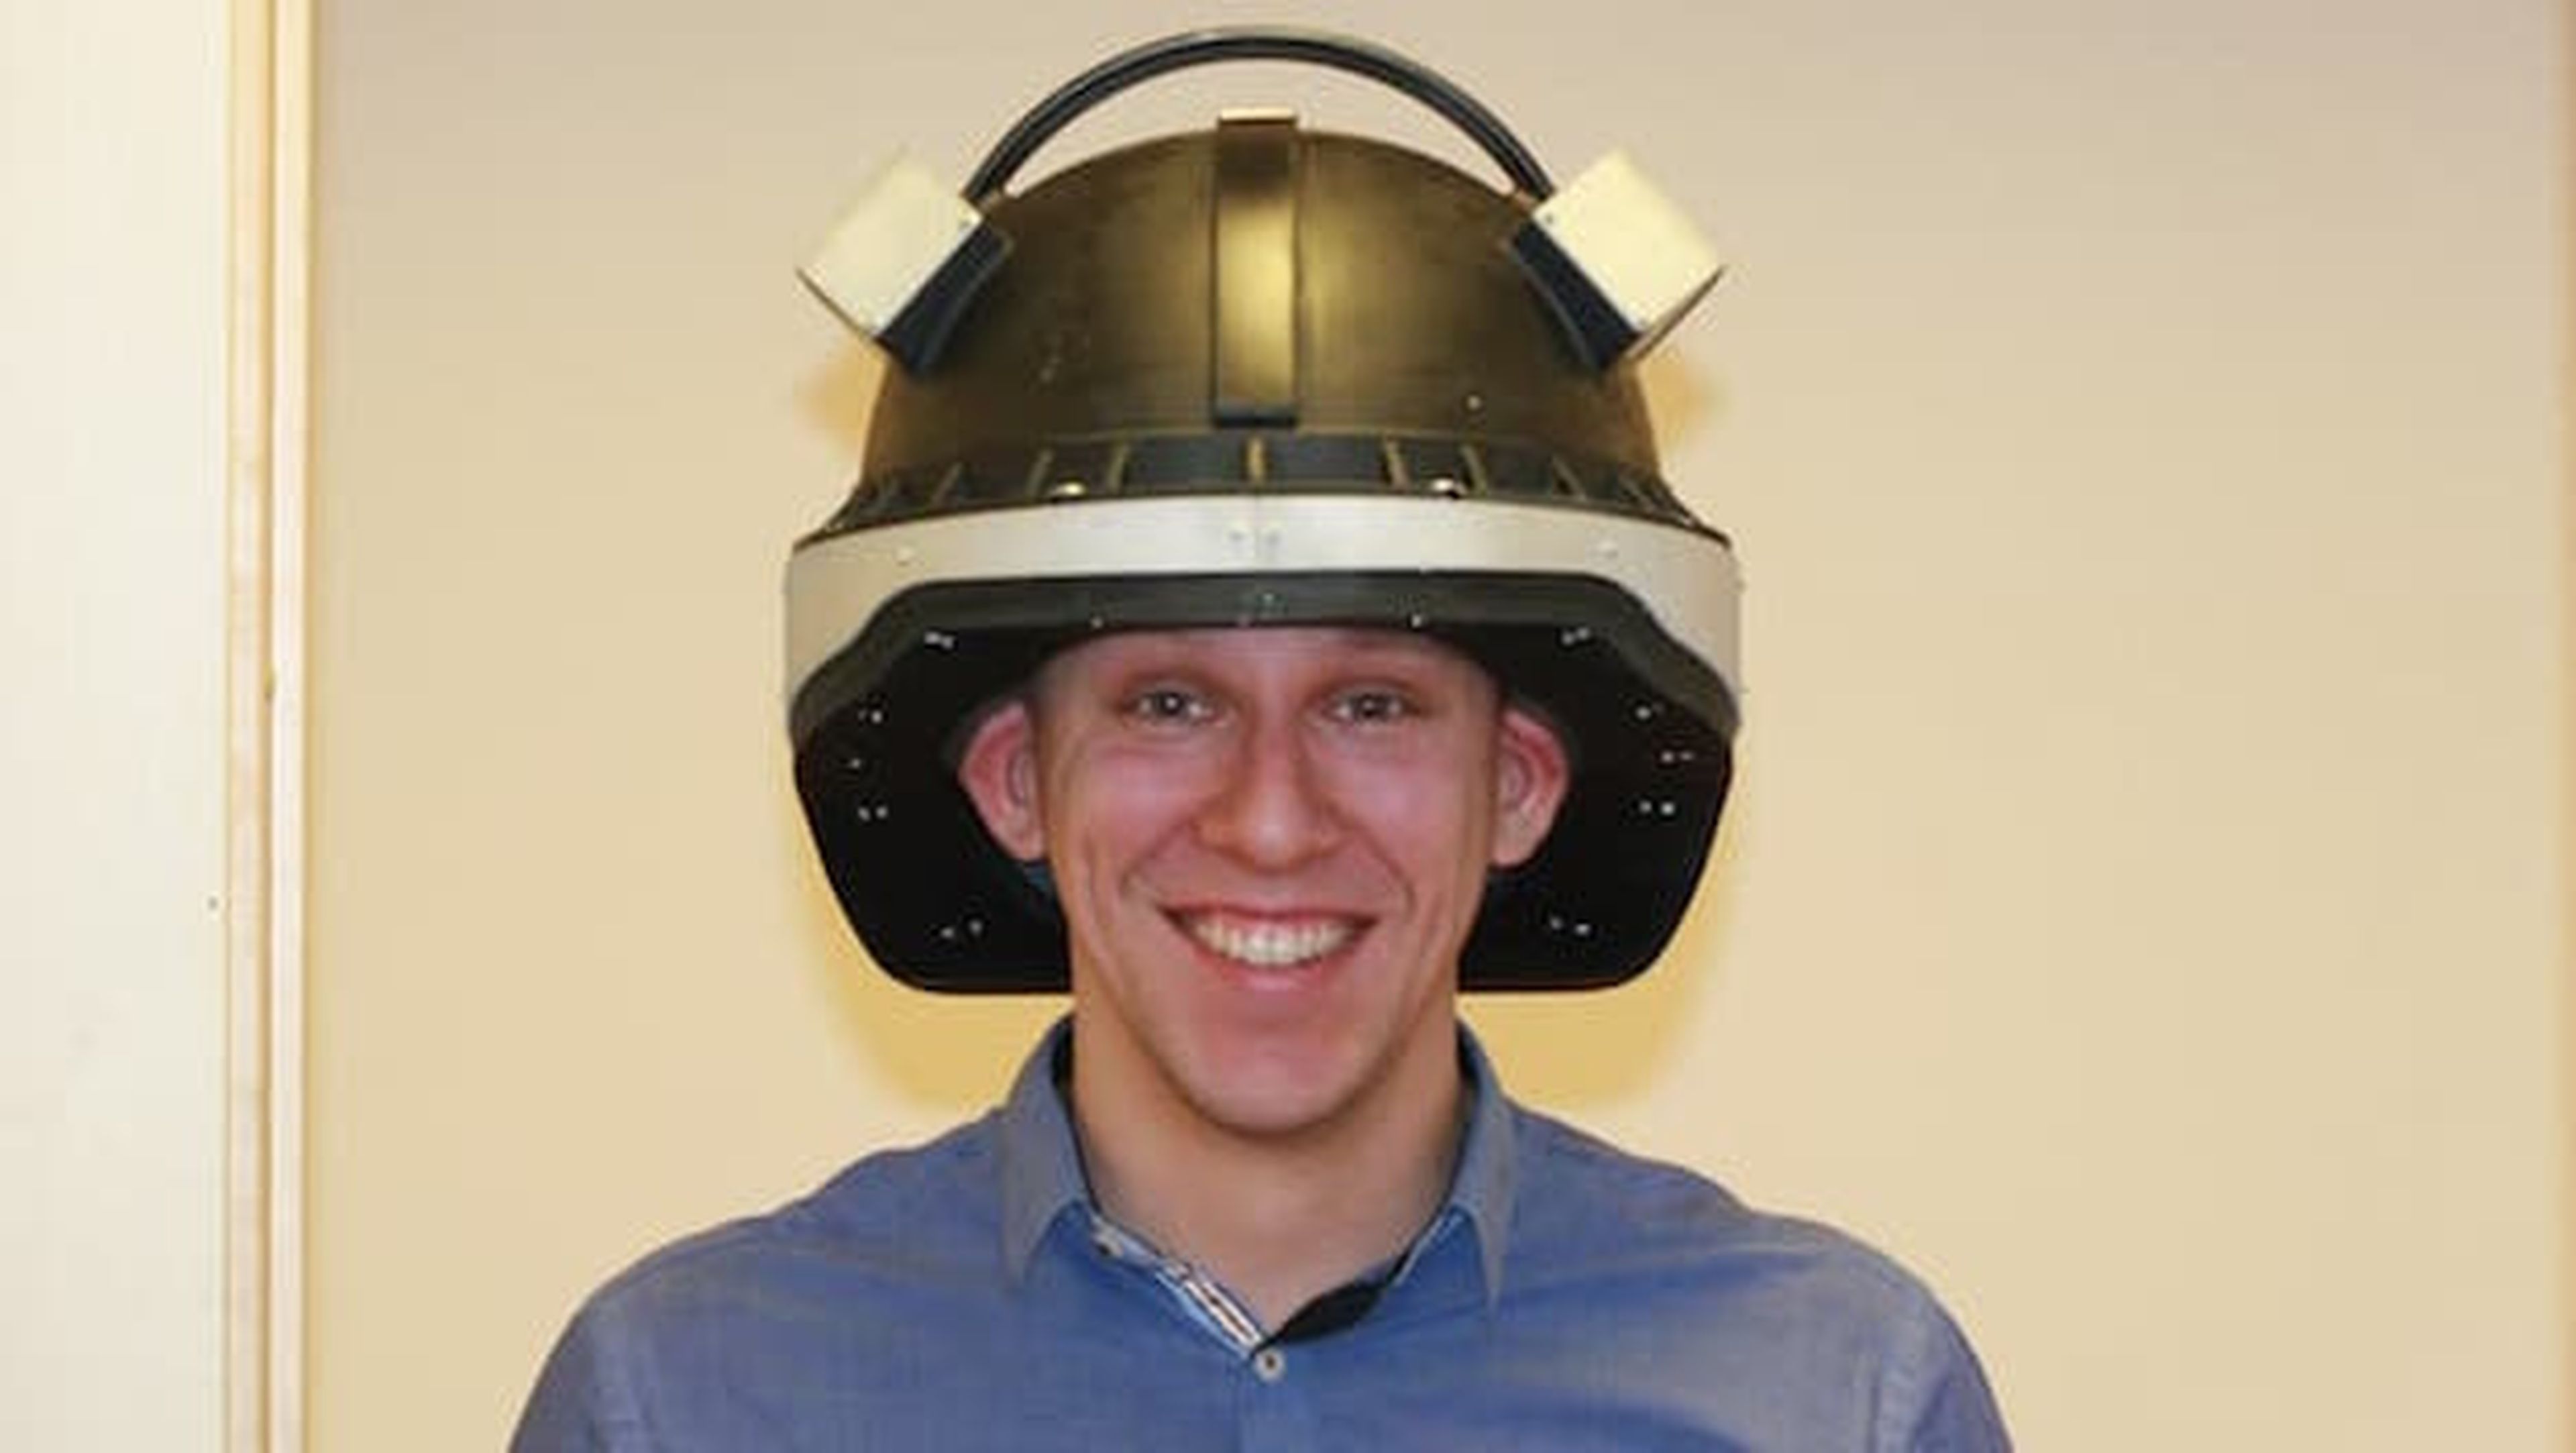 El casco permite detectar contusiones